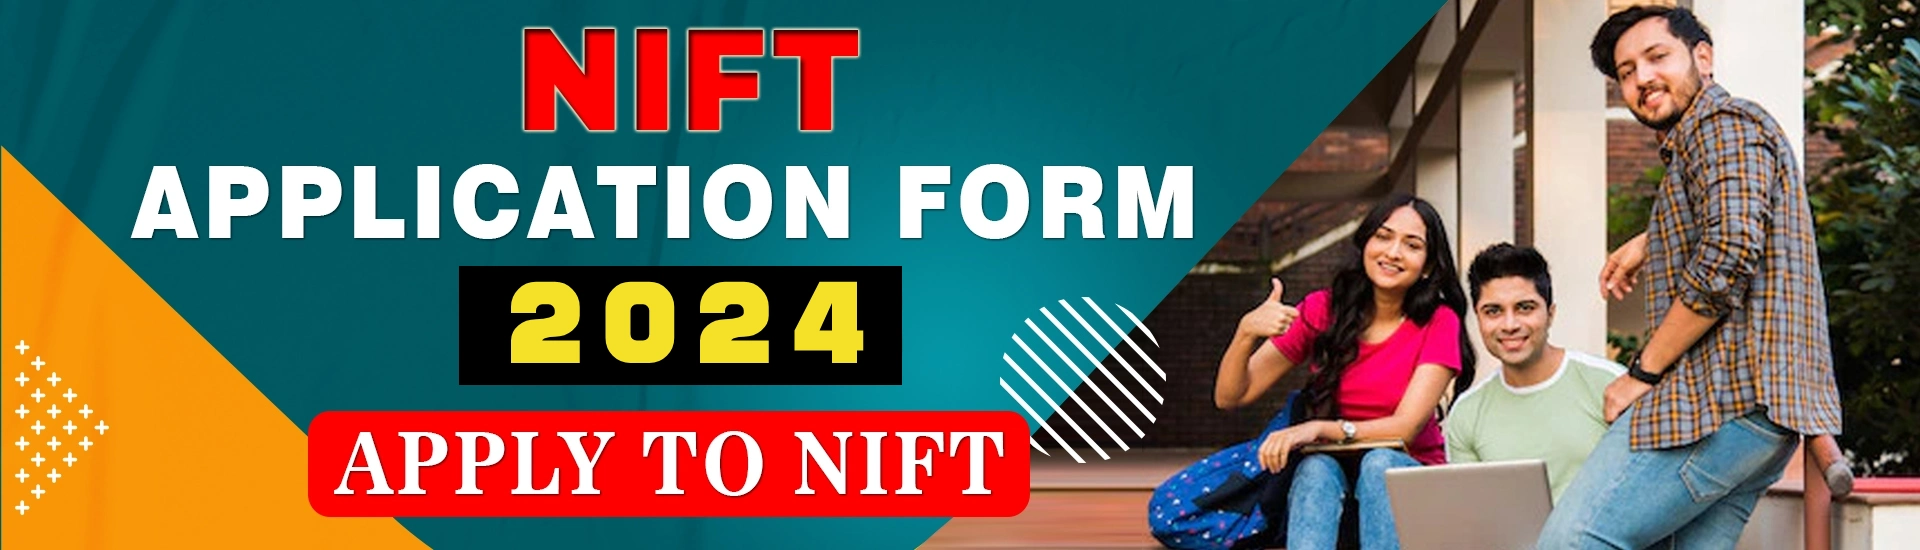 NIFT APPLICATION FORM 2024